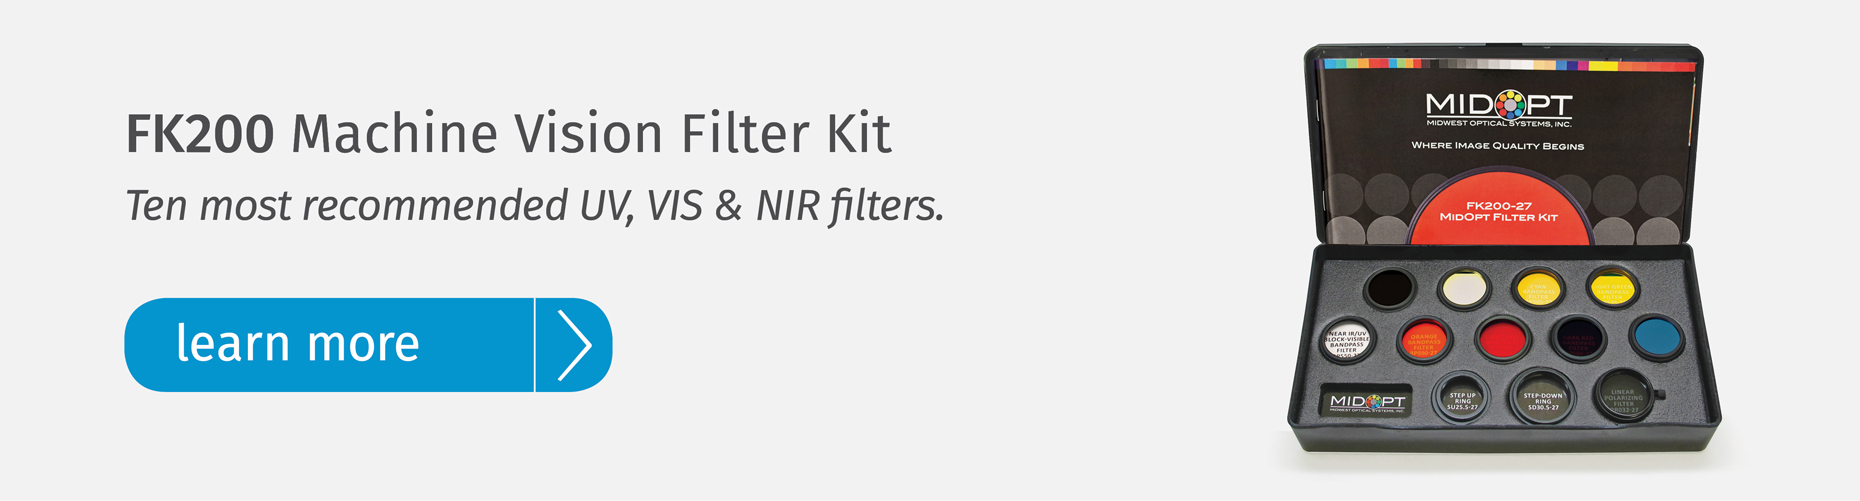 MidOpt FK200 Machine Vision Bandpass Filter Test Kit